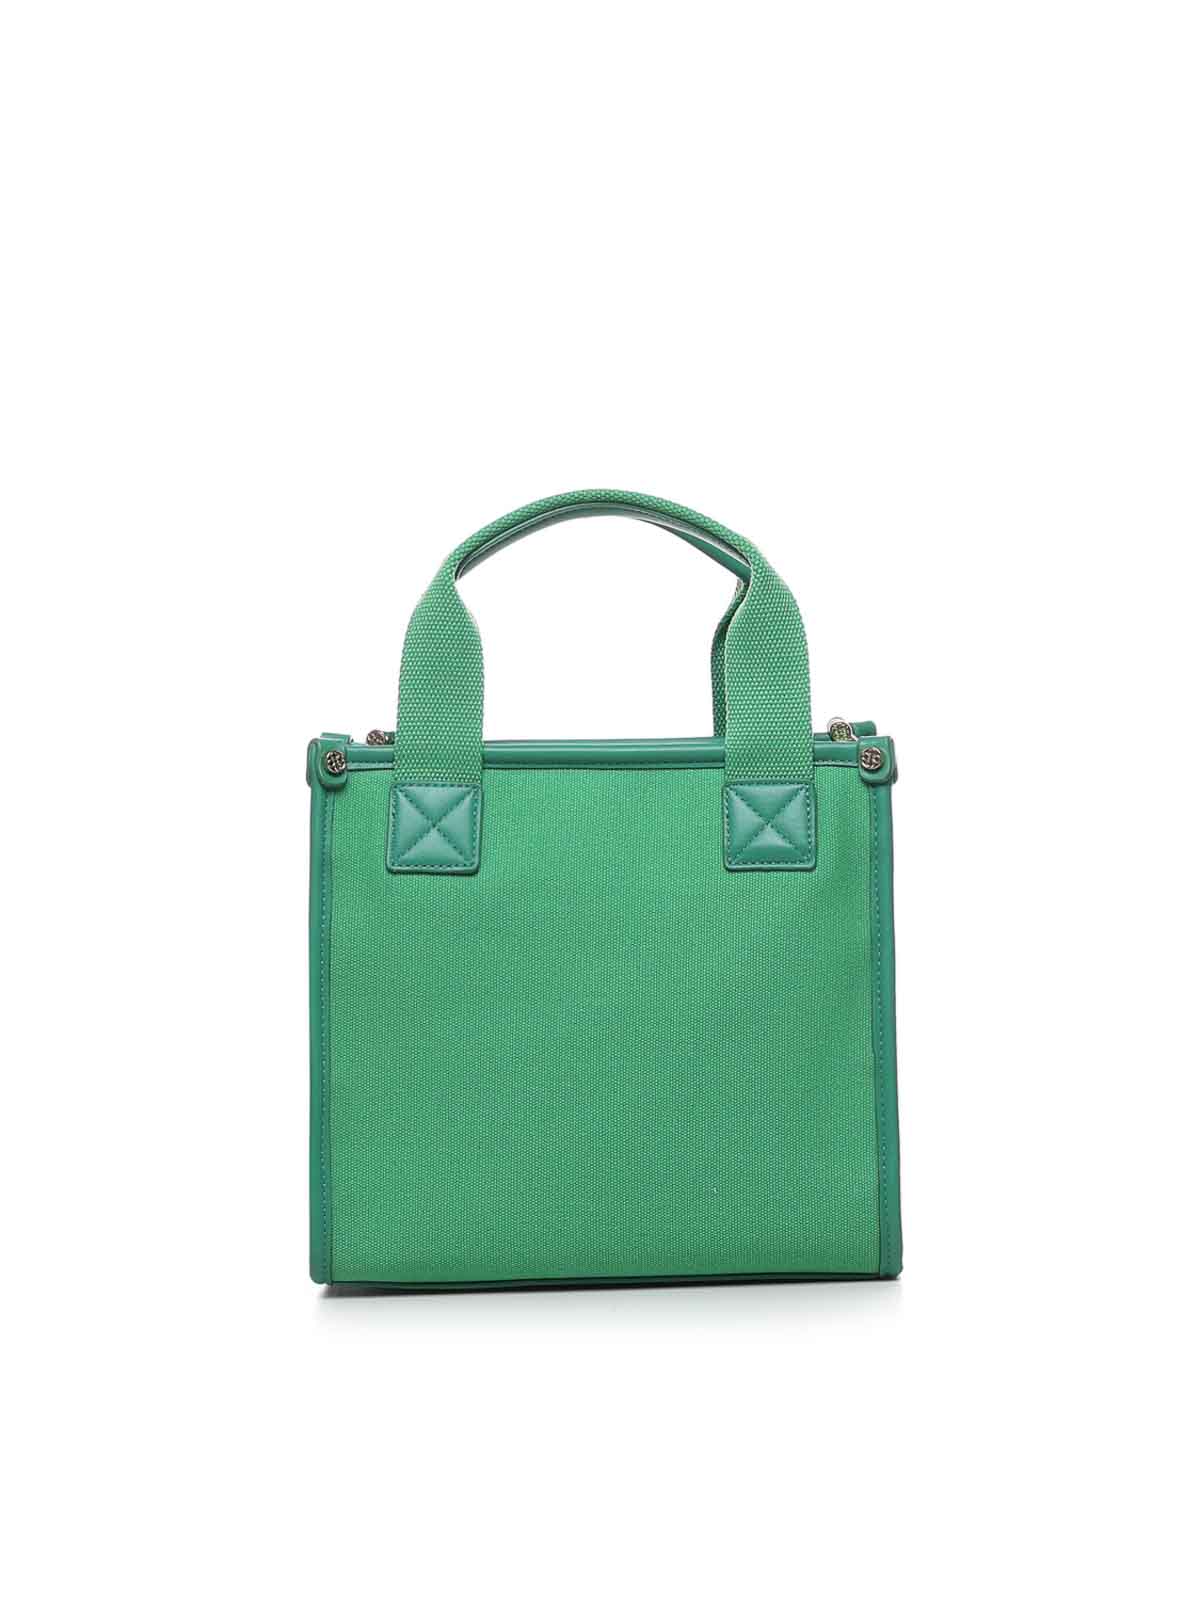 Shop V73 Responsibility Tote Bag In Verde